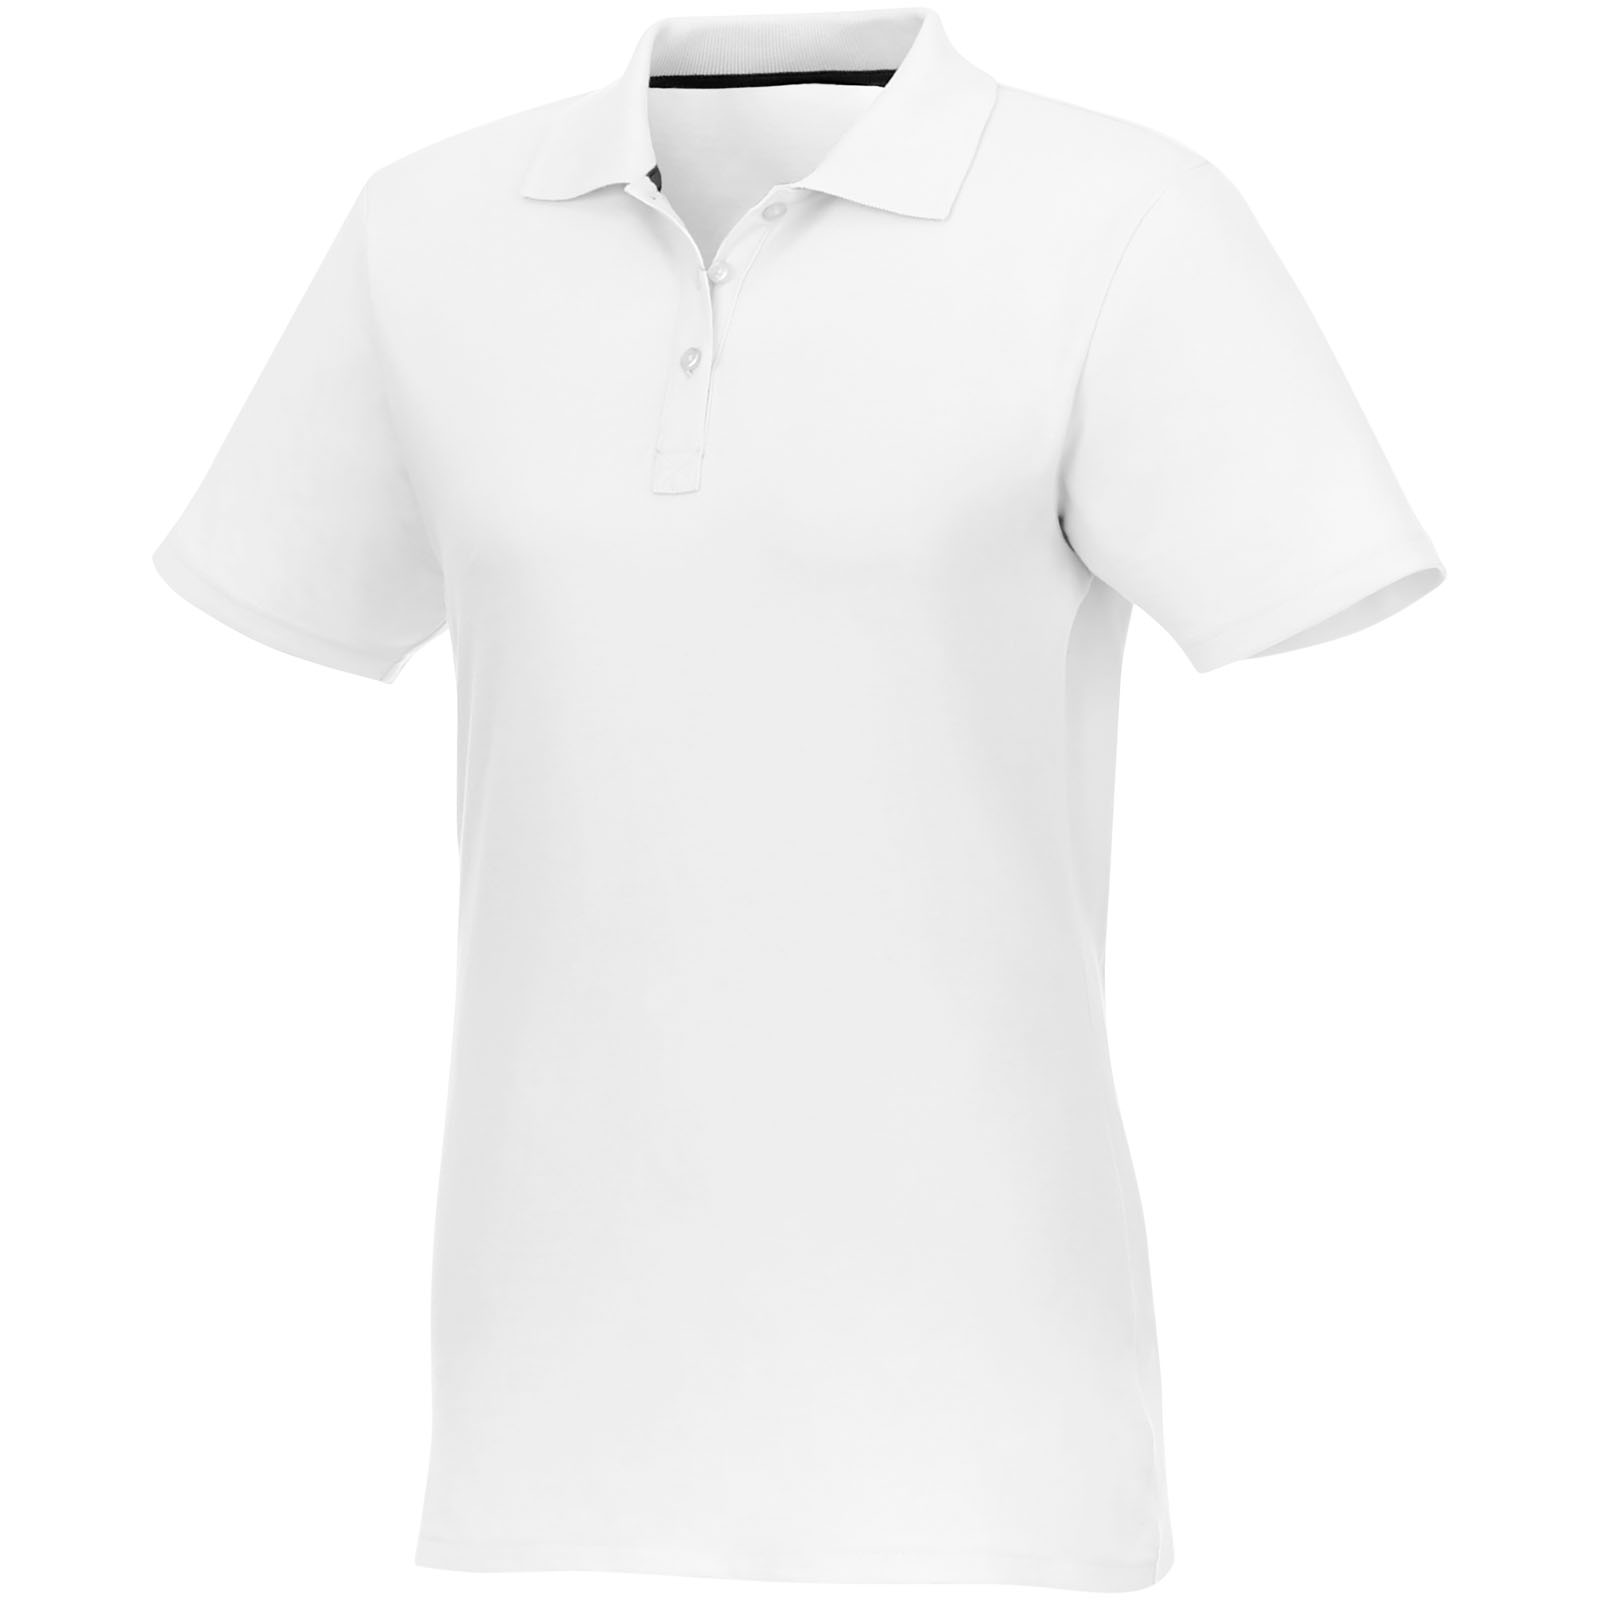 Clothing - Helios short sleeve women's polo